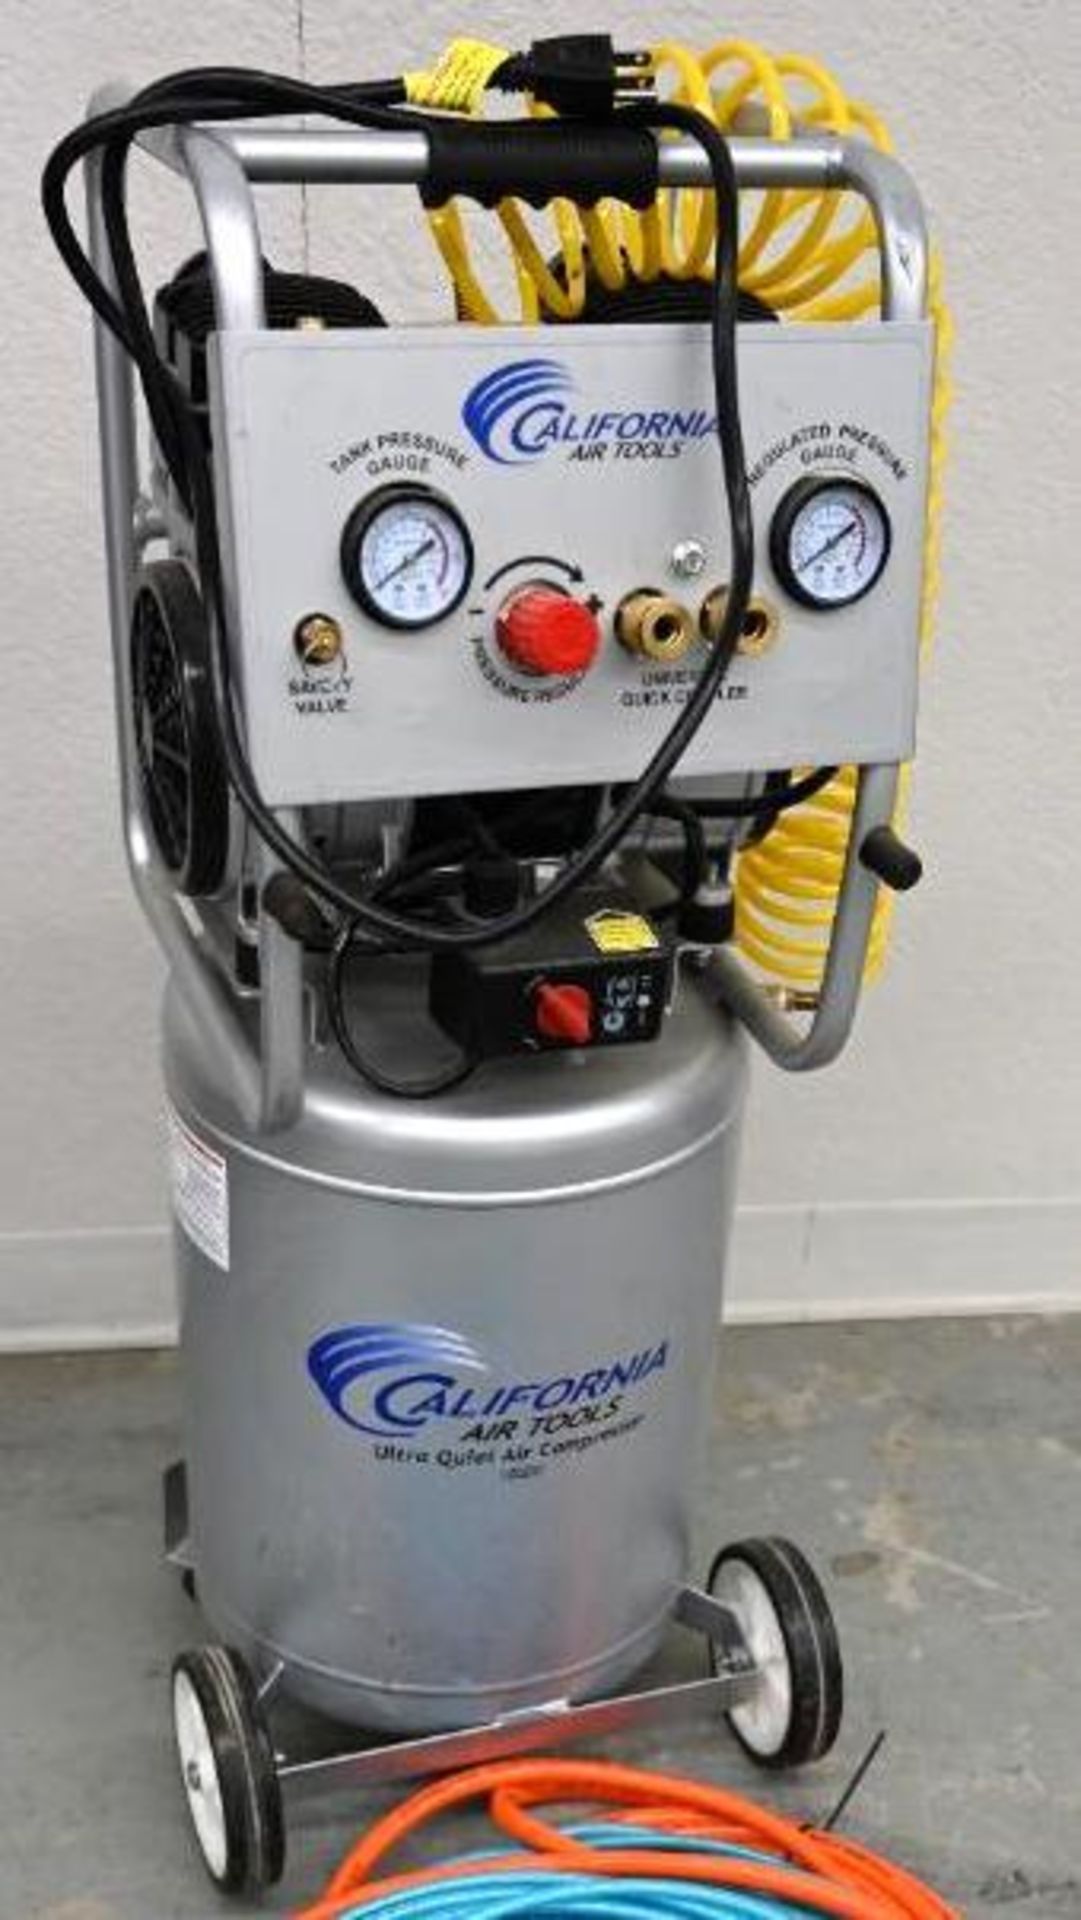 California Ultra Quiet Air Compressor with Hose - Image 9 of 11